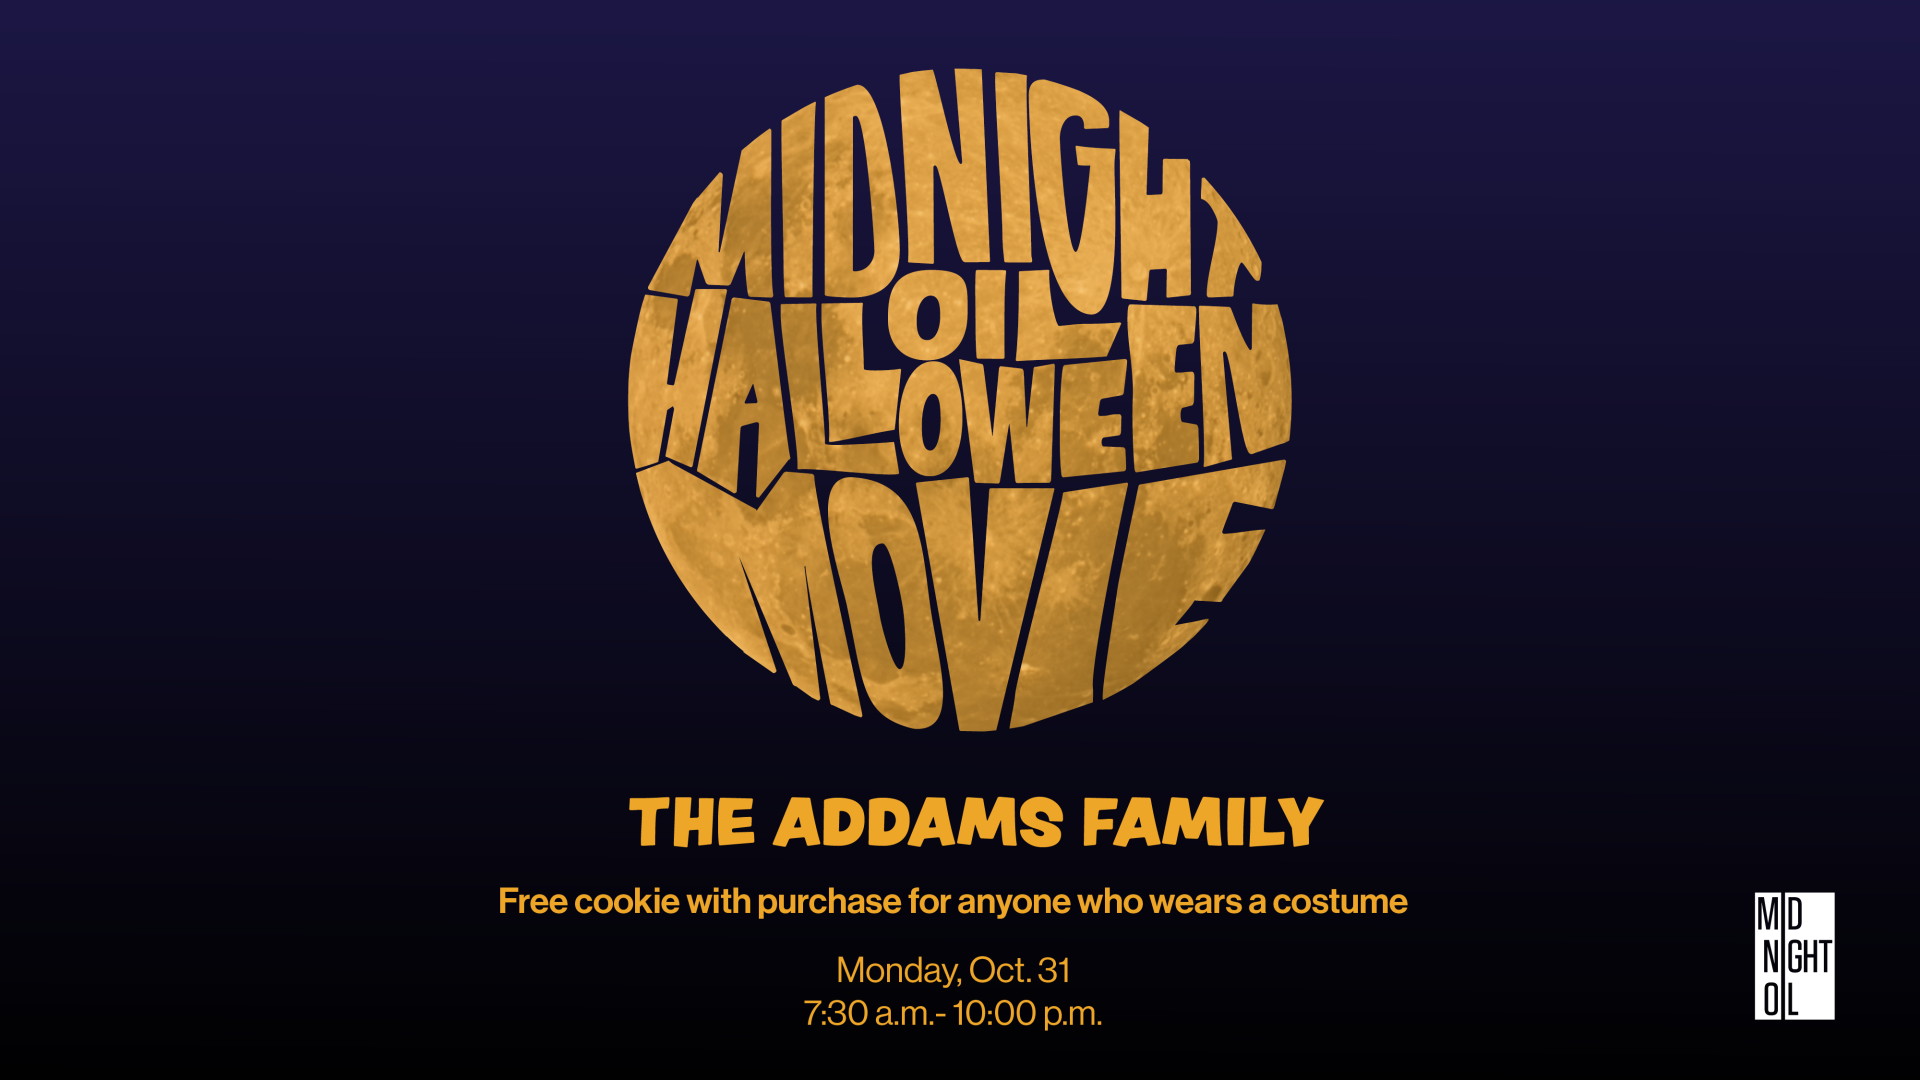 Midnight Oil Halloween Movie: Addams Family